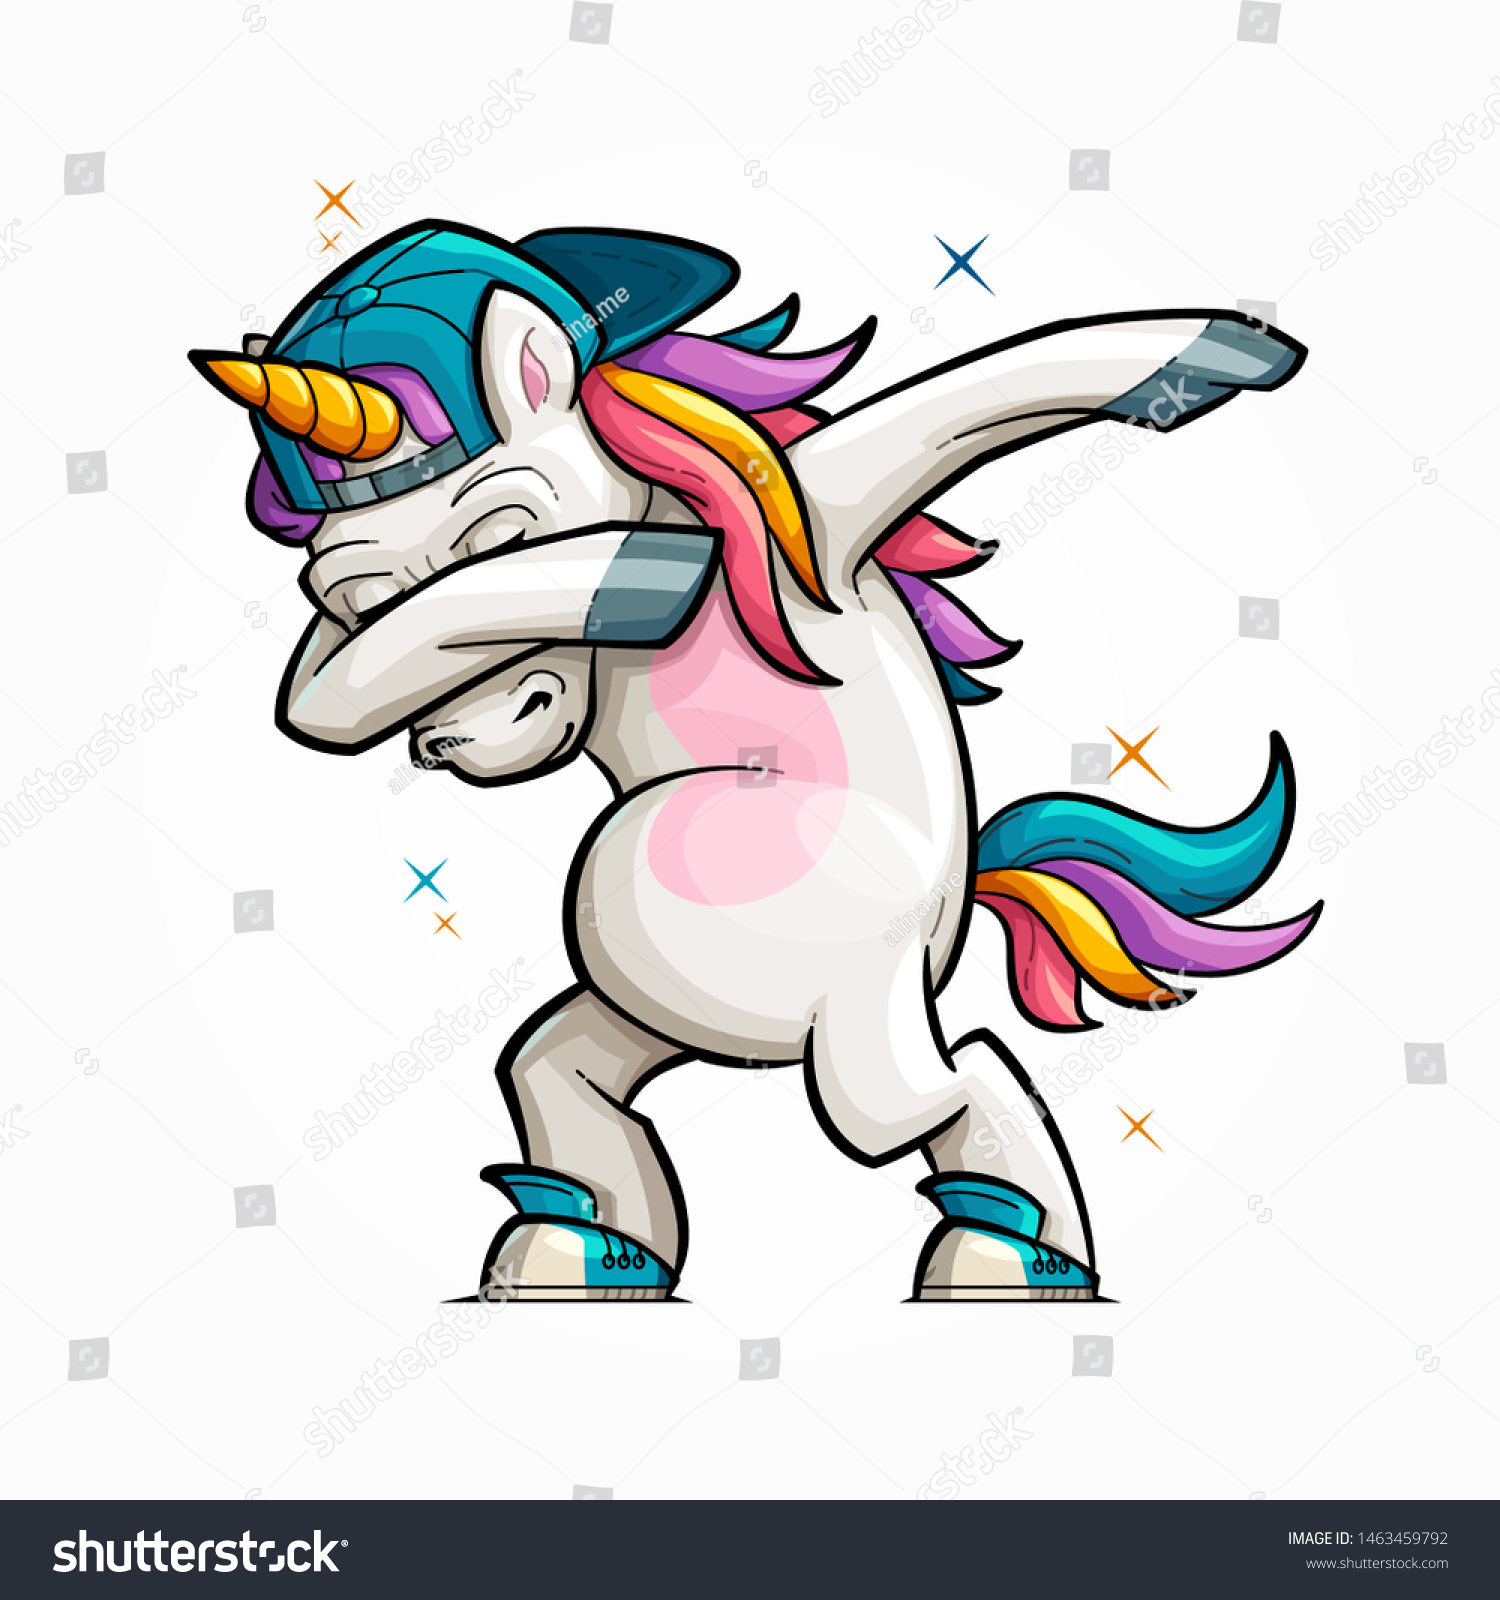 SVG of Vector Illustration of a Cartoon Dabbing Unicorn With a Rainbow Tail Wearing a Baseball Cap Backwards. svg